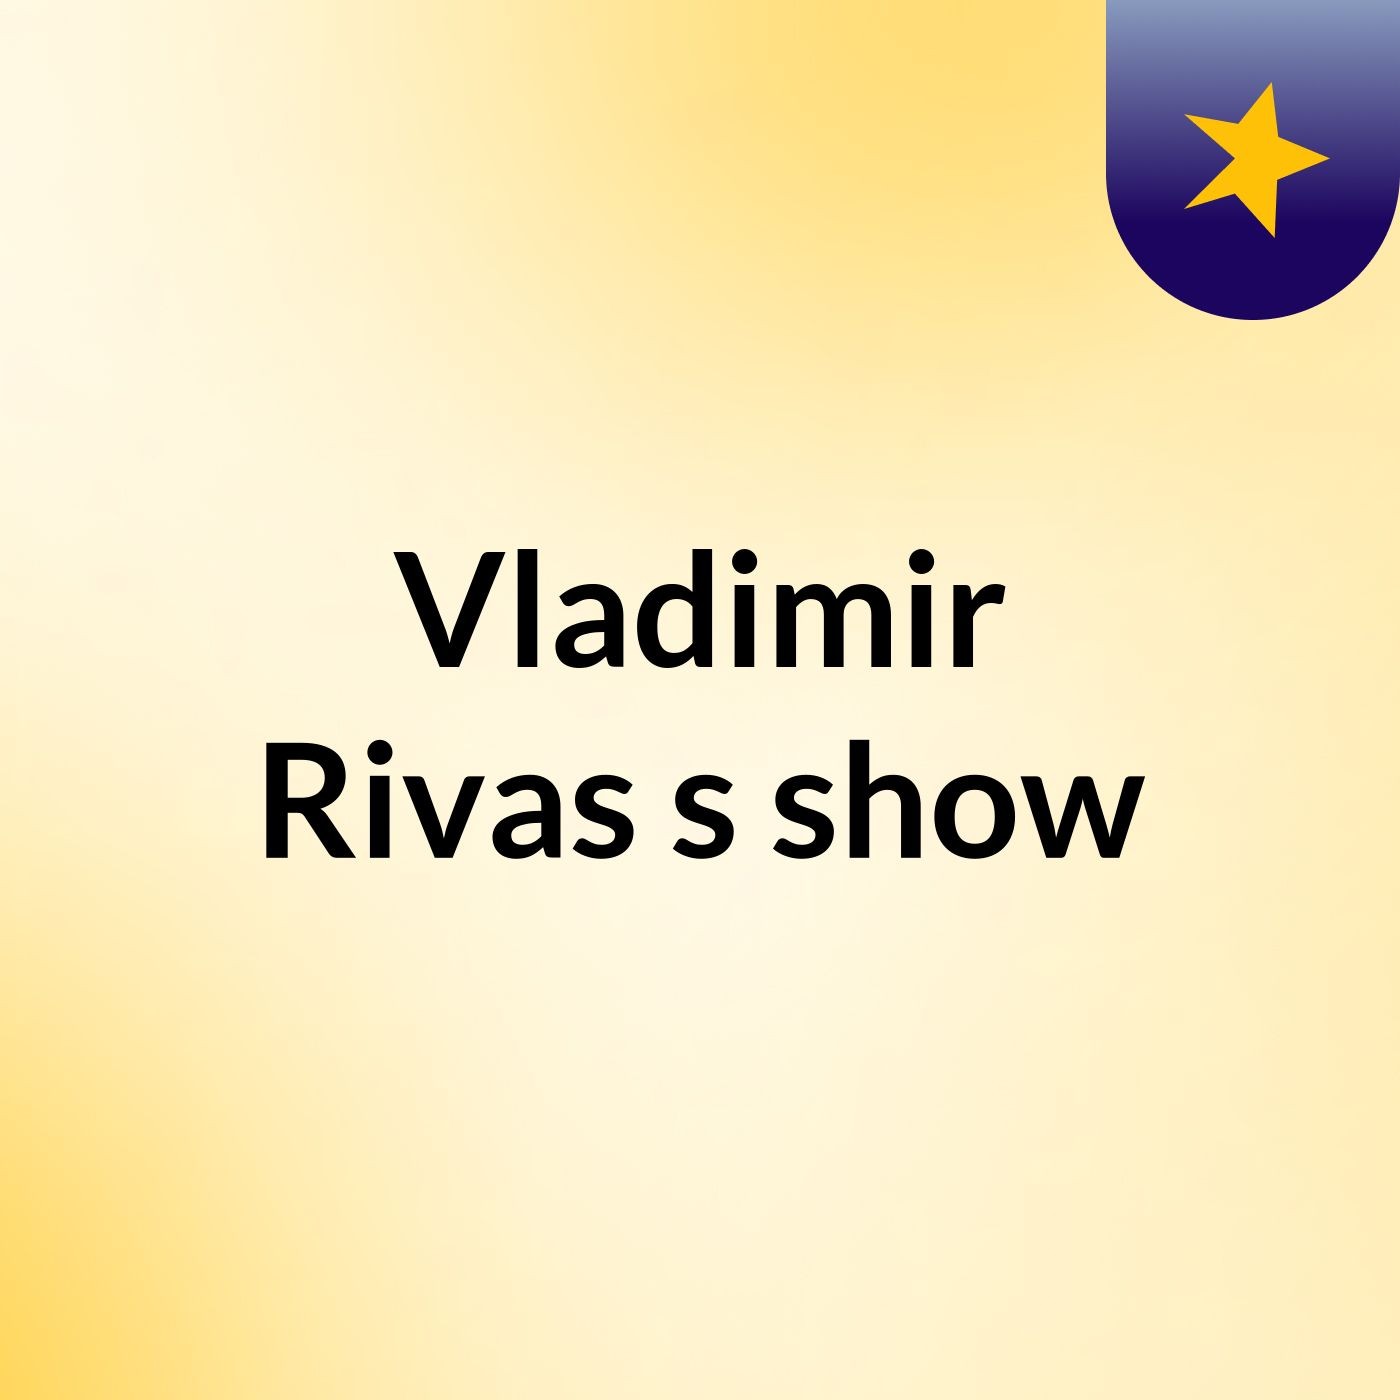 Vladimir Rivas's show